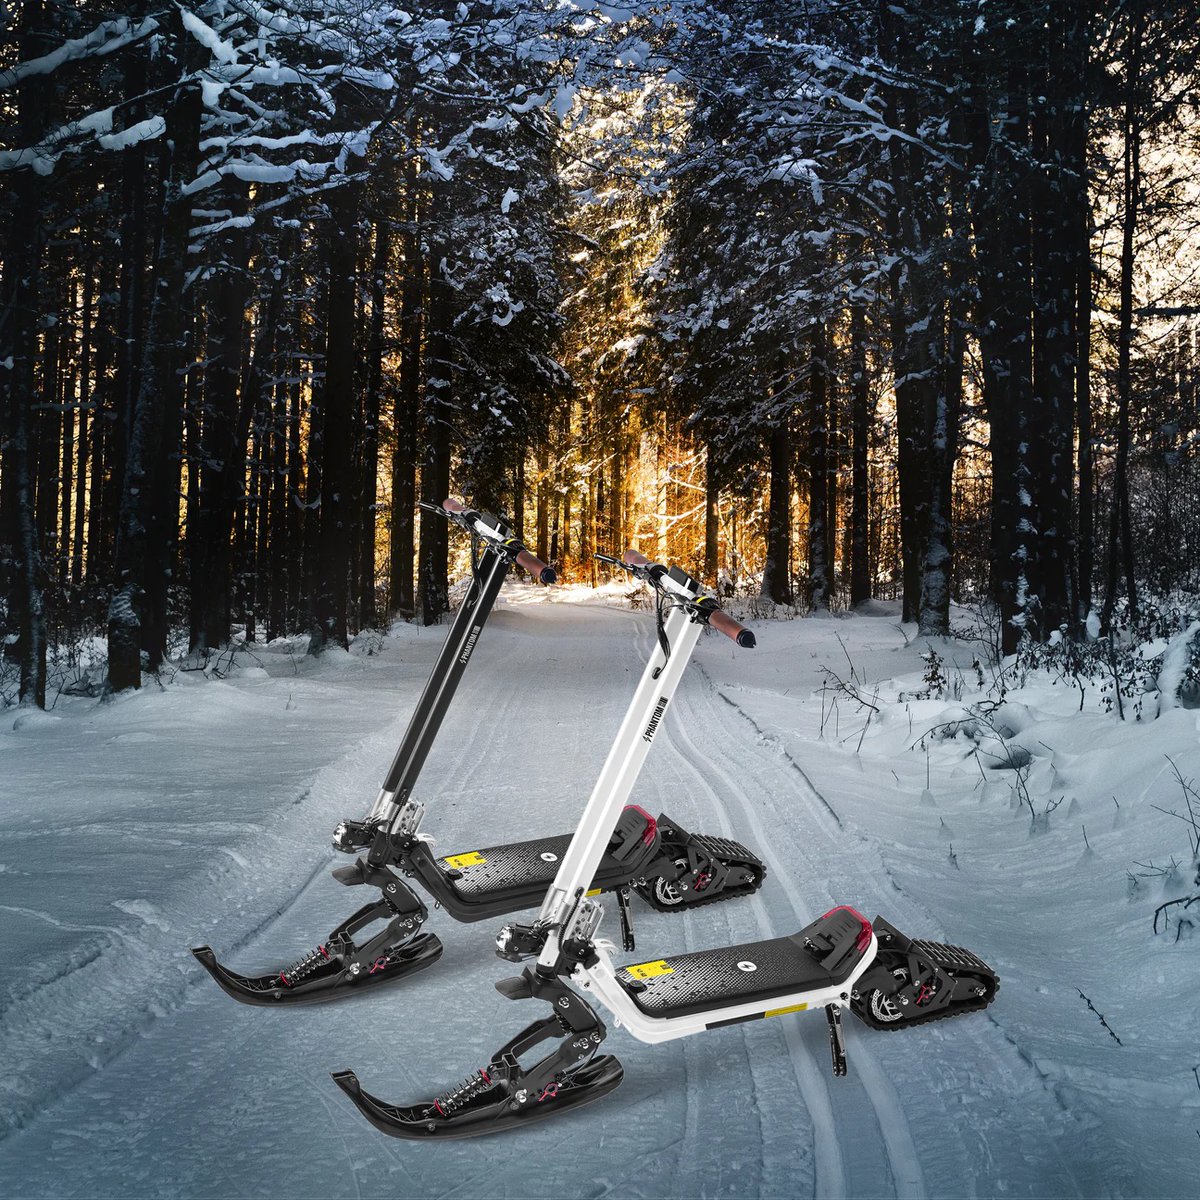 Phantom GOGO Introduces the G63 Snow Scooter
l8r.it/YTfT
#trending #ElectricVehicles #Transportation #innovation #writerslift #technology #TechNews #snow #winter #mountainlife #happythursday #thursdays #thursdaymotivation #Donnerstag